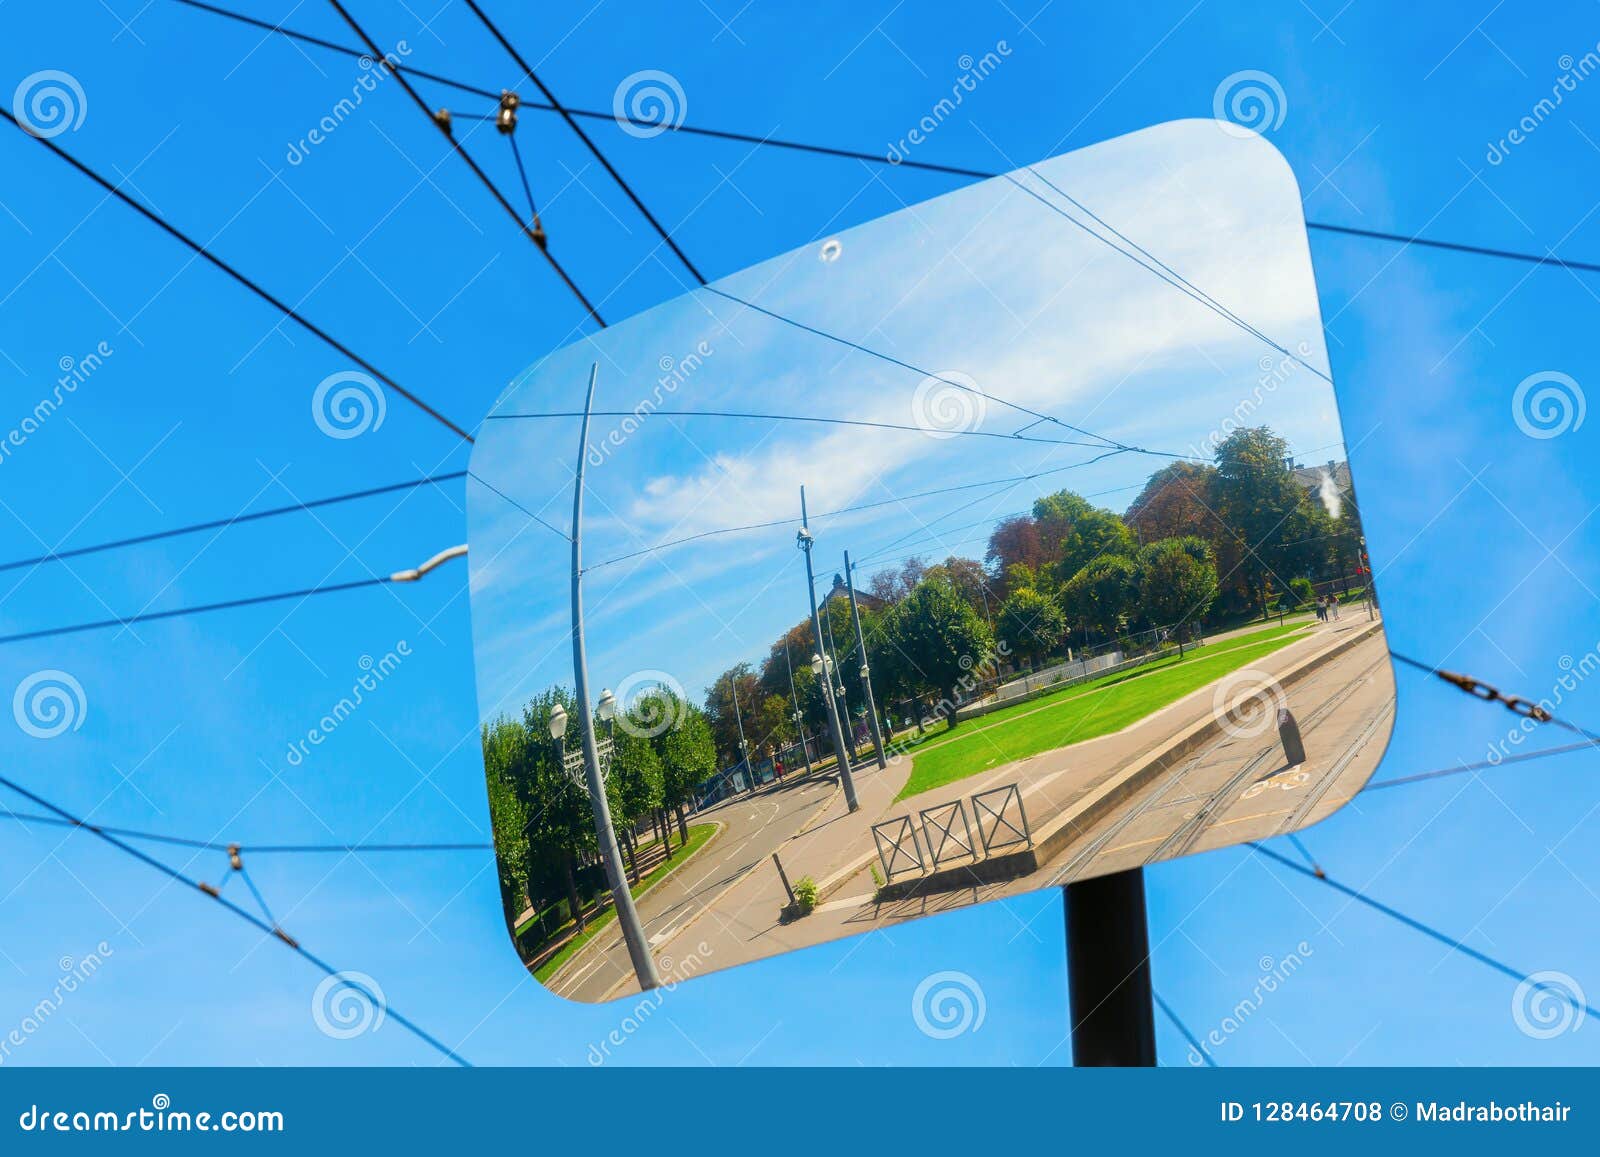 traffic mirror reflects the place de la republique in strasbourg, france